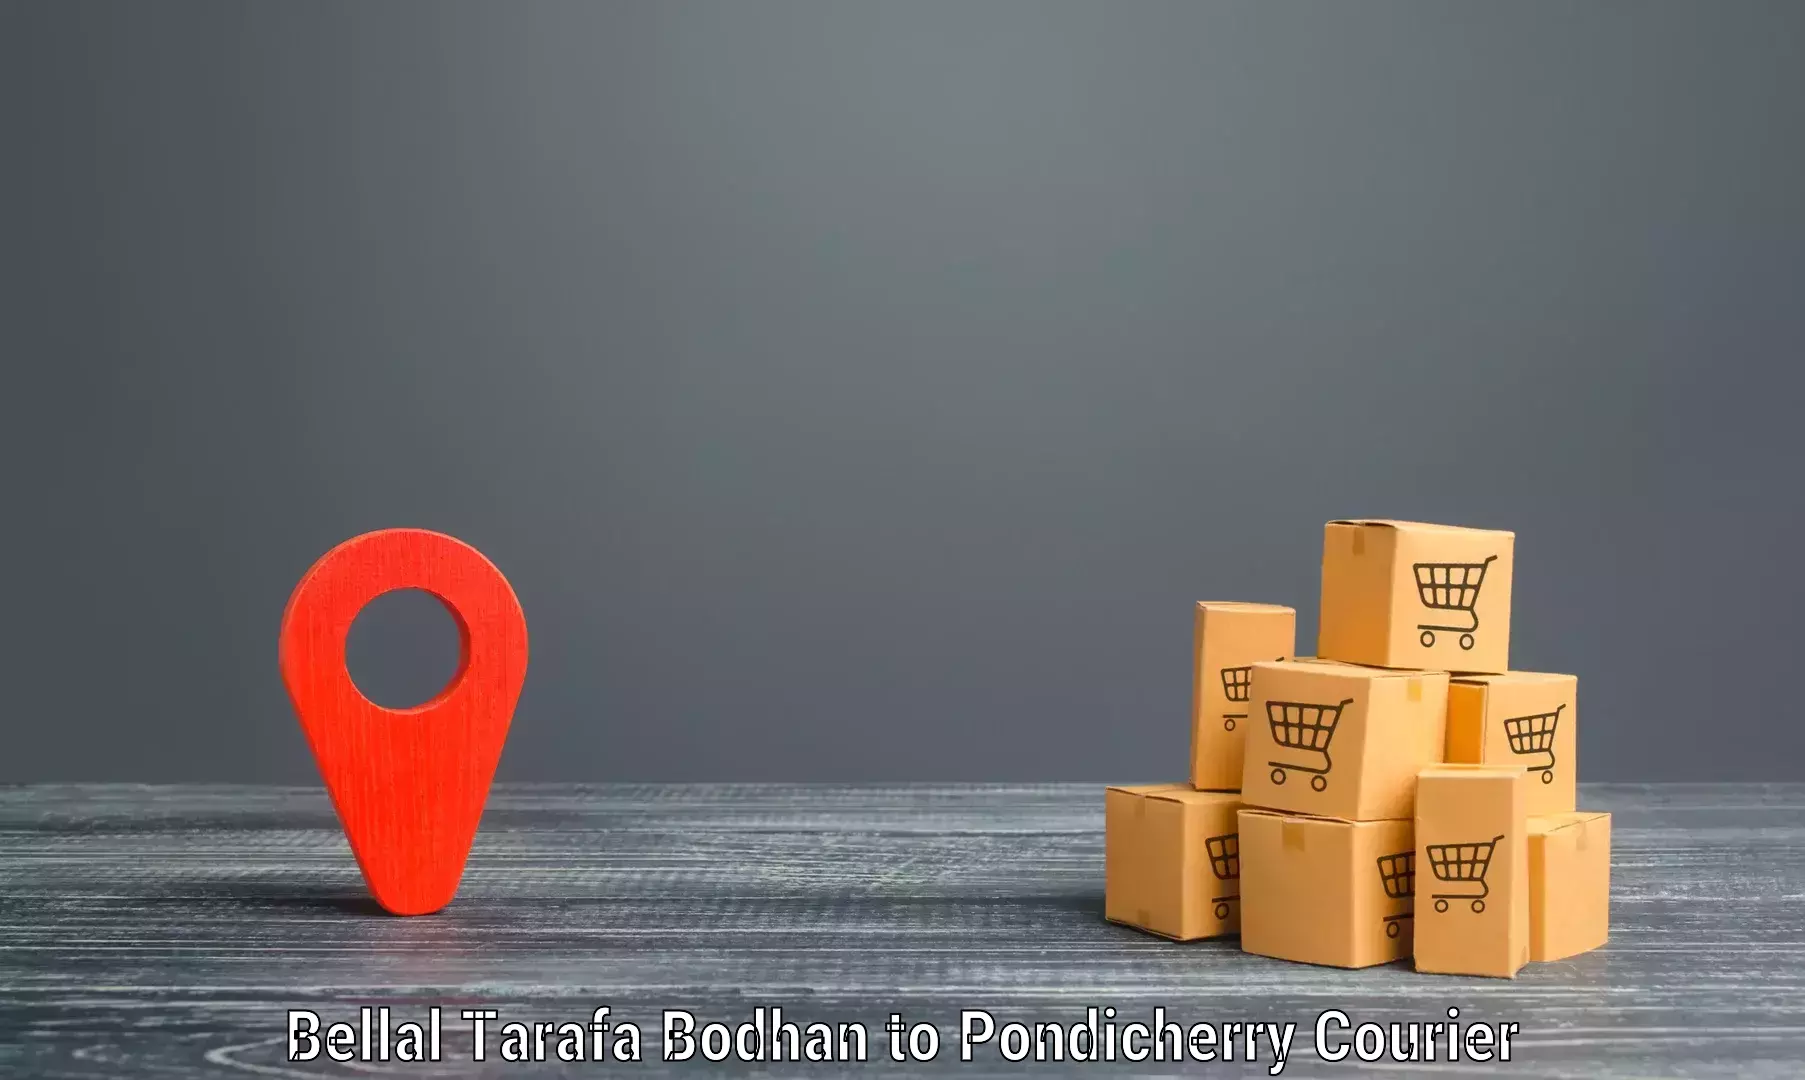 Courier service efficiency Bellal Tarafa Bodhan to Metttupalayam